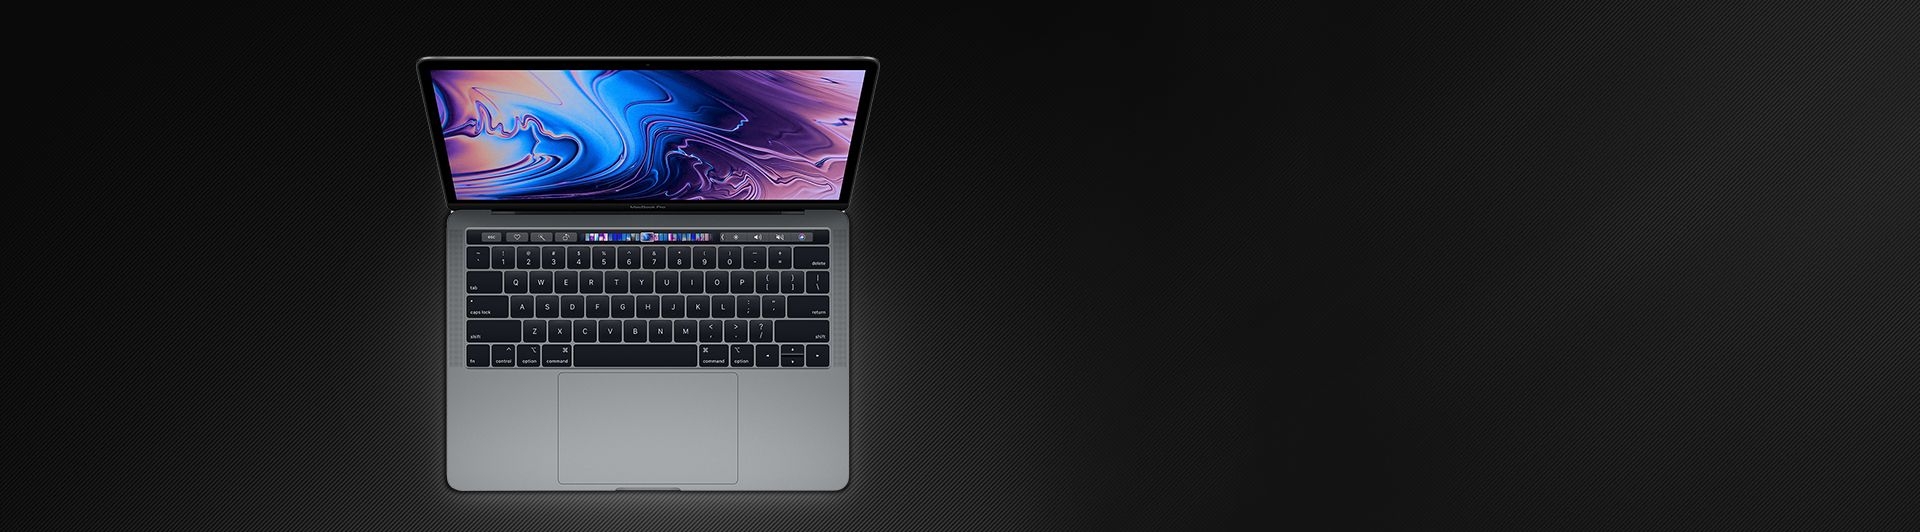 Macbook Pro i5 13.3 inch 2019 256GB Touch Bar Grey (MV962SA/A)